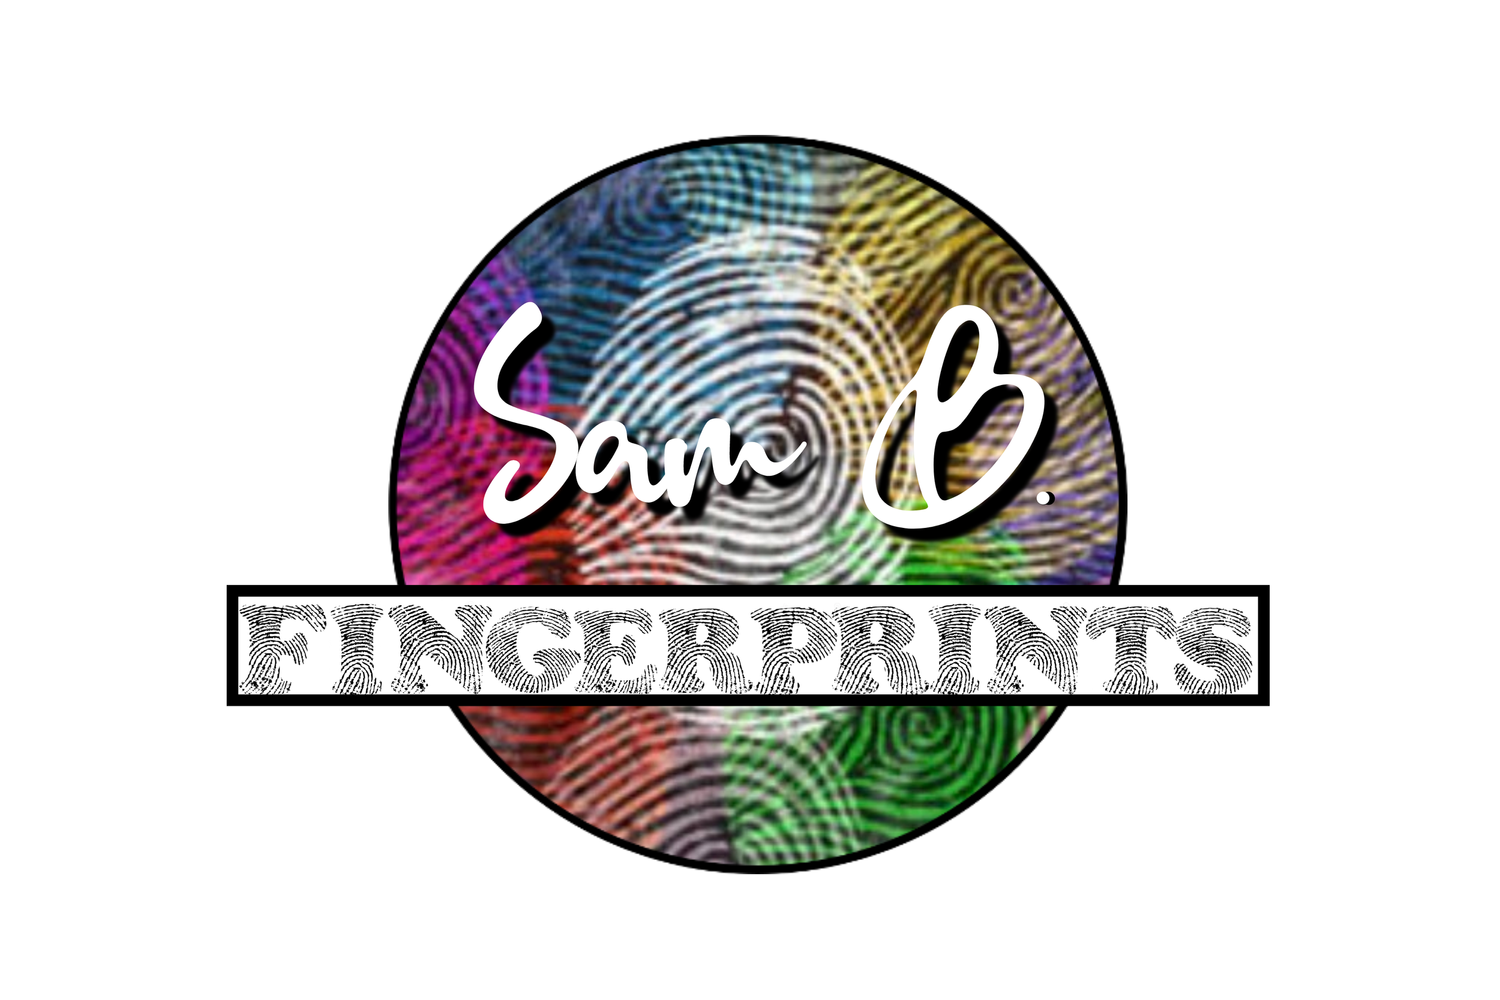 www.sambfingerprints.com